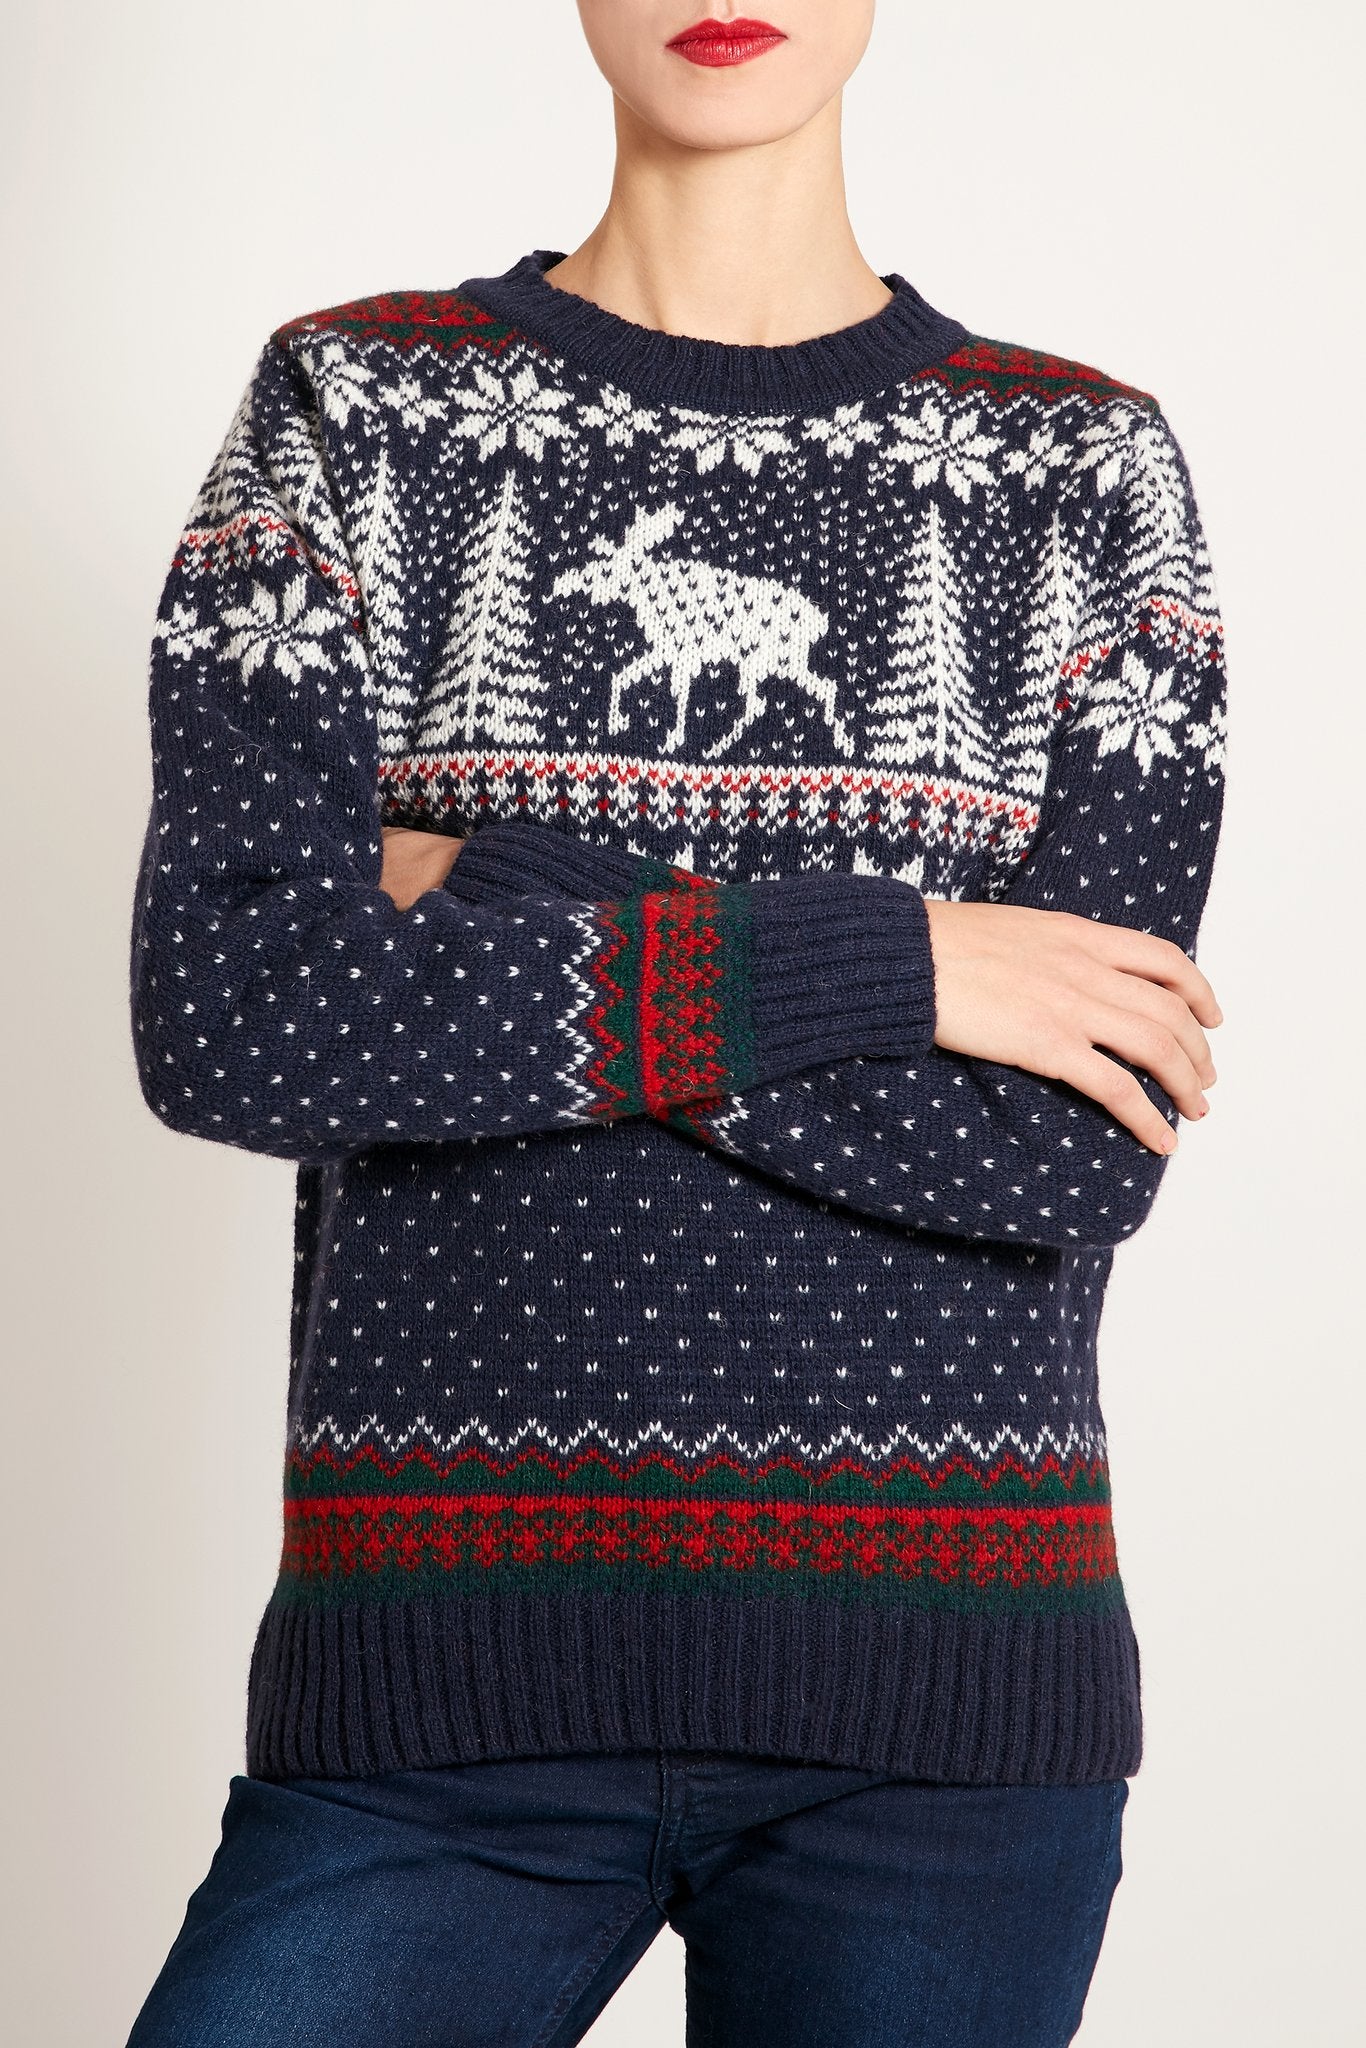 Folkloore sweater guida regali natale Shopify